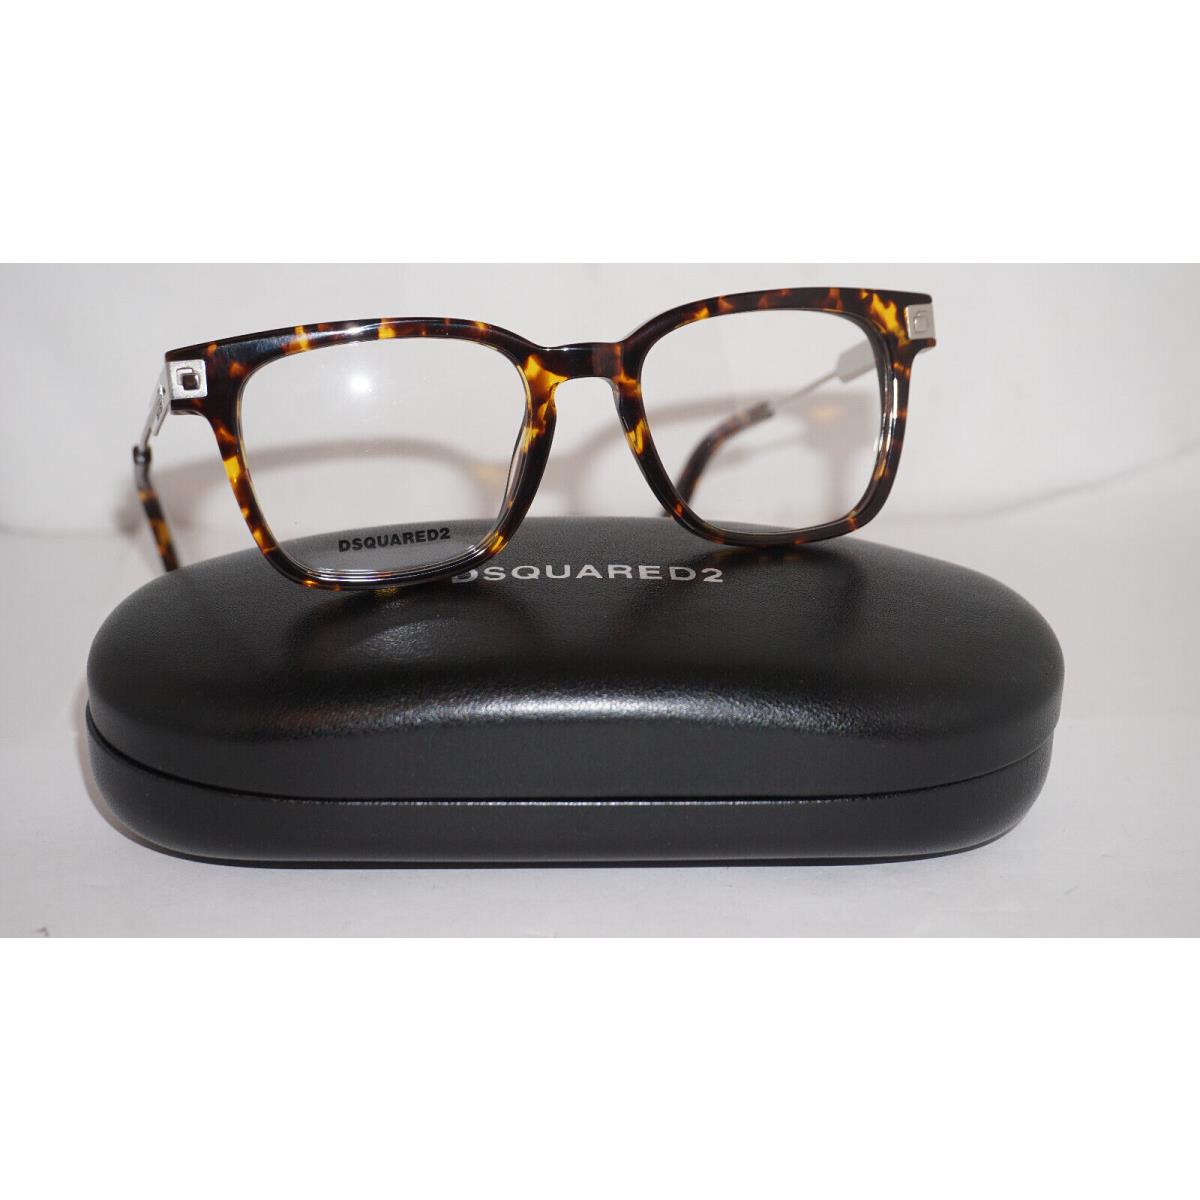 DSQUARED2 Eyeglasses Havana Silver DQ5244 053 49 18 145